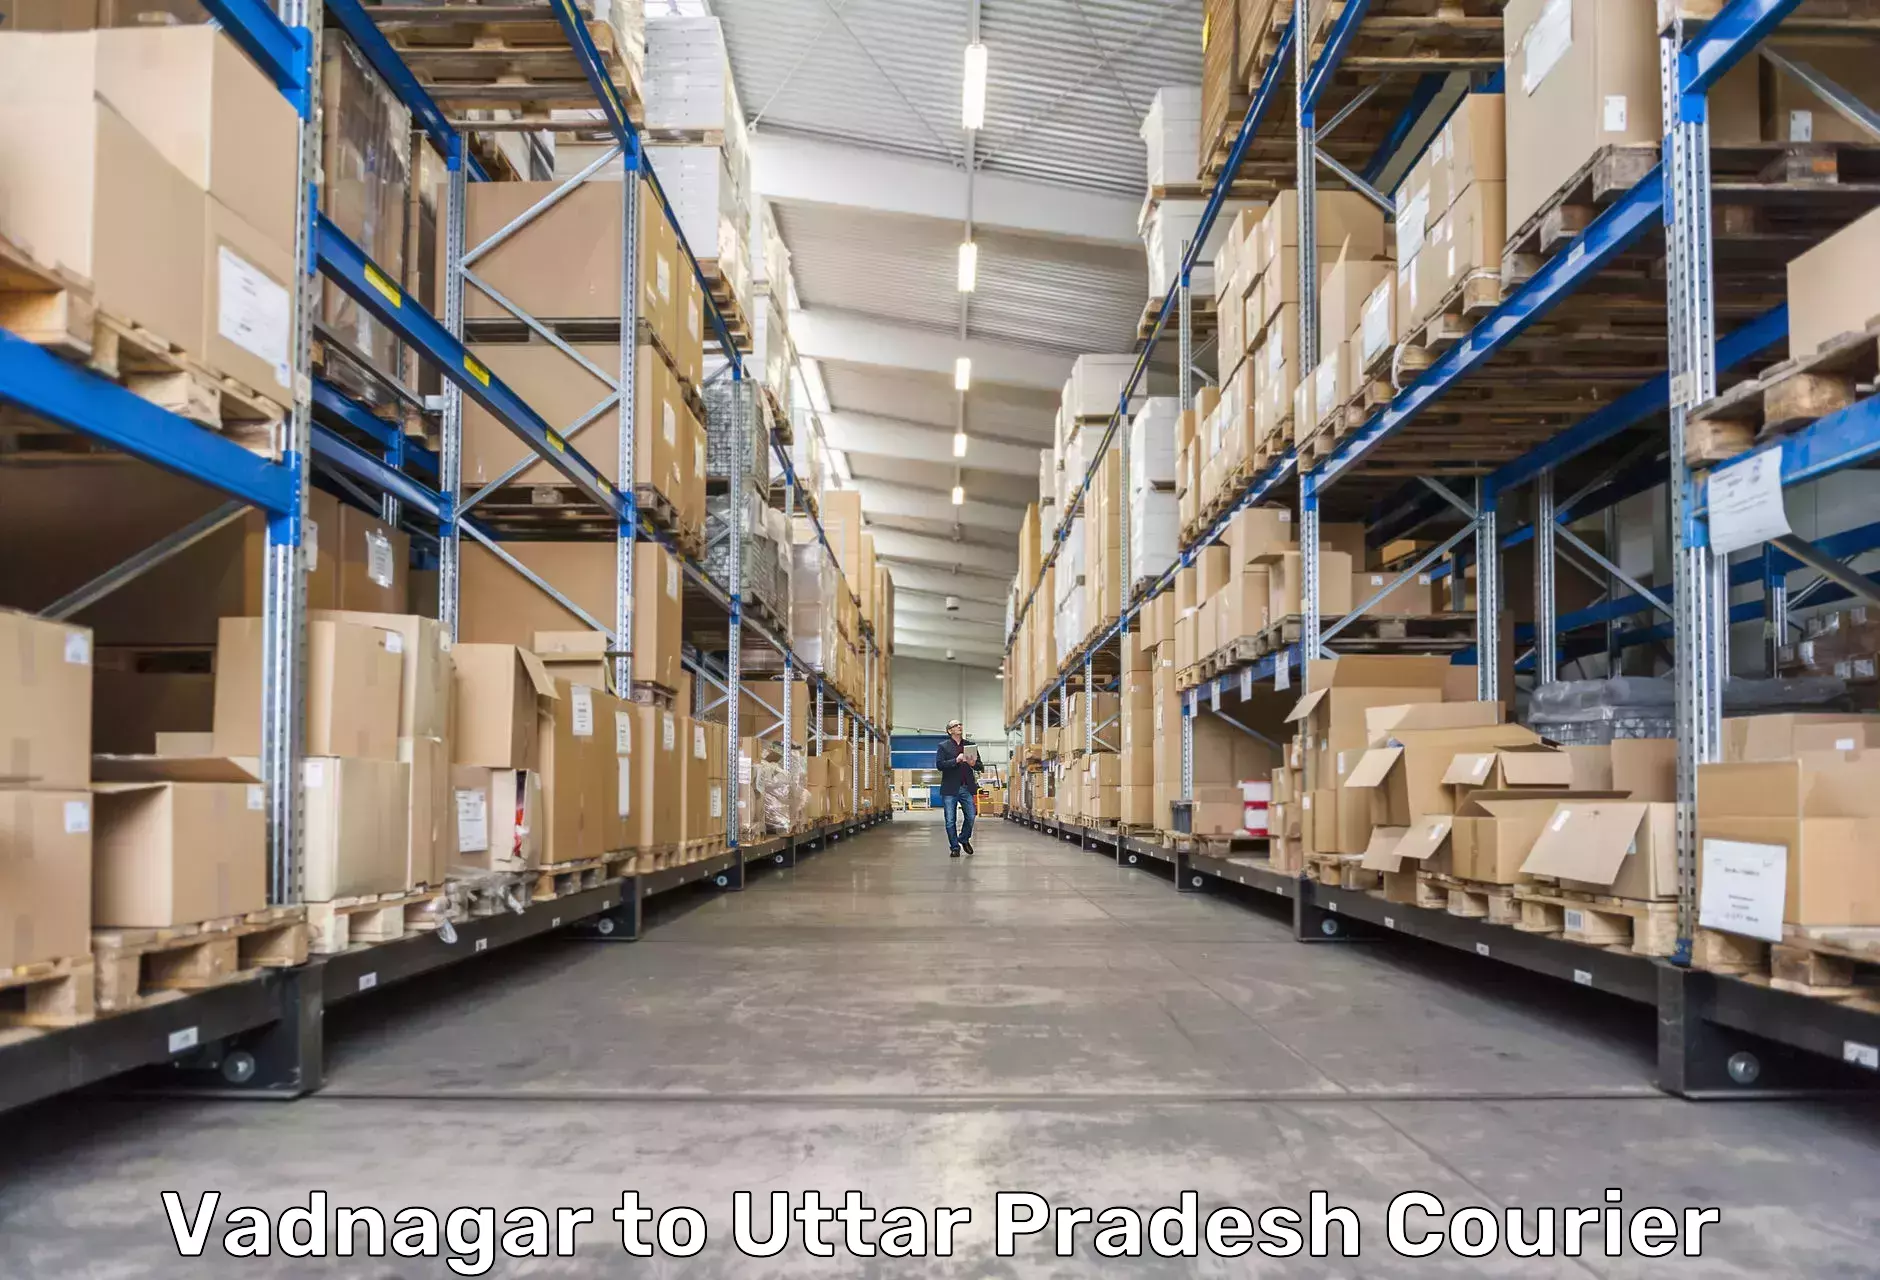 State-of-the-art courier technology Vadnagar to Mehnagar